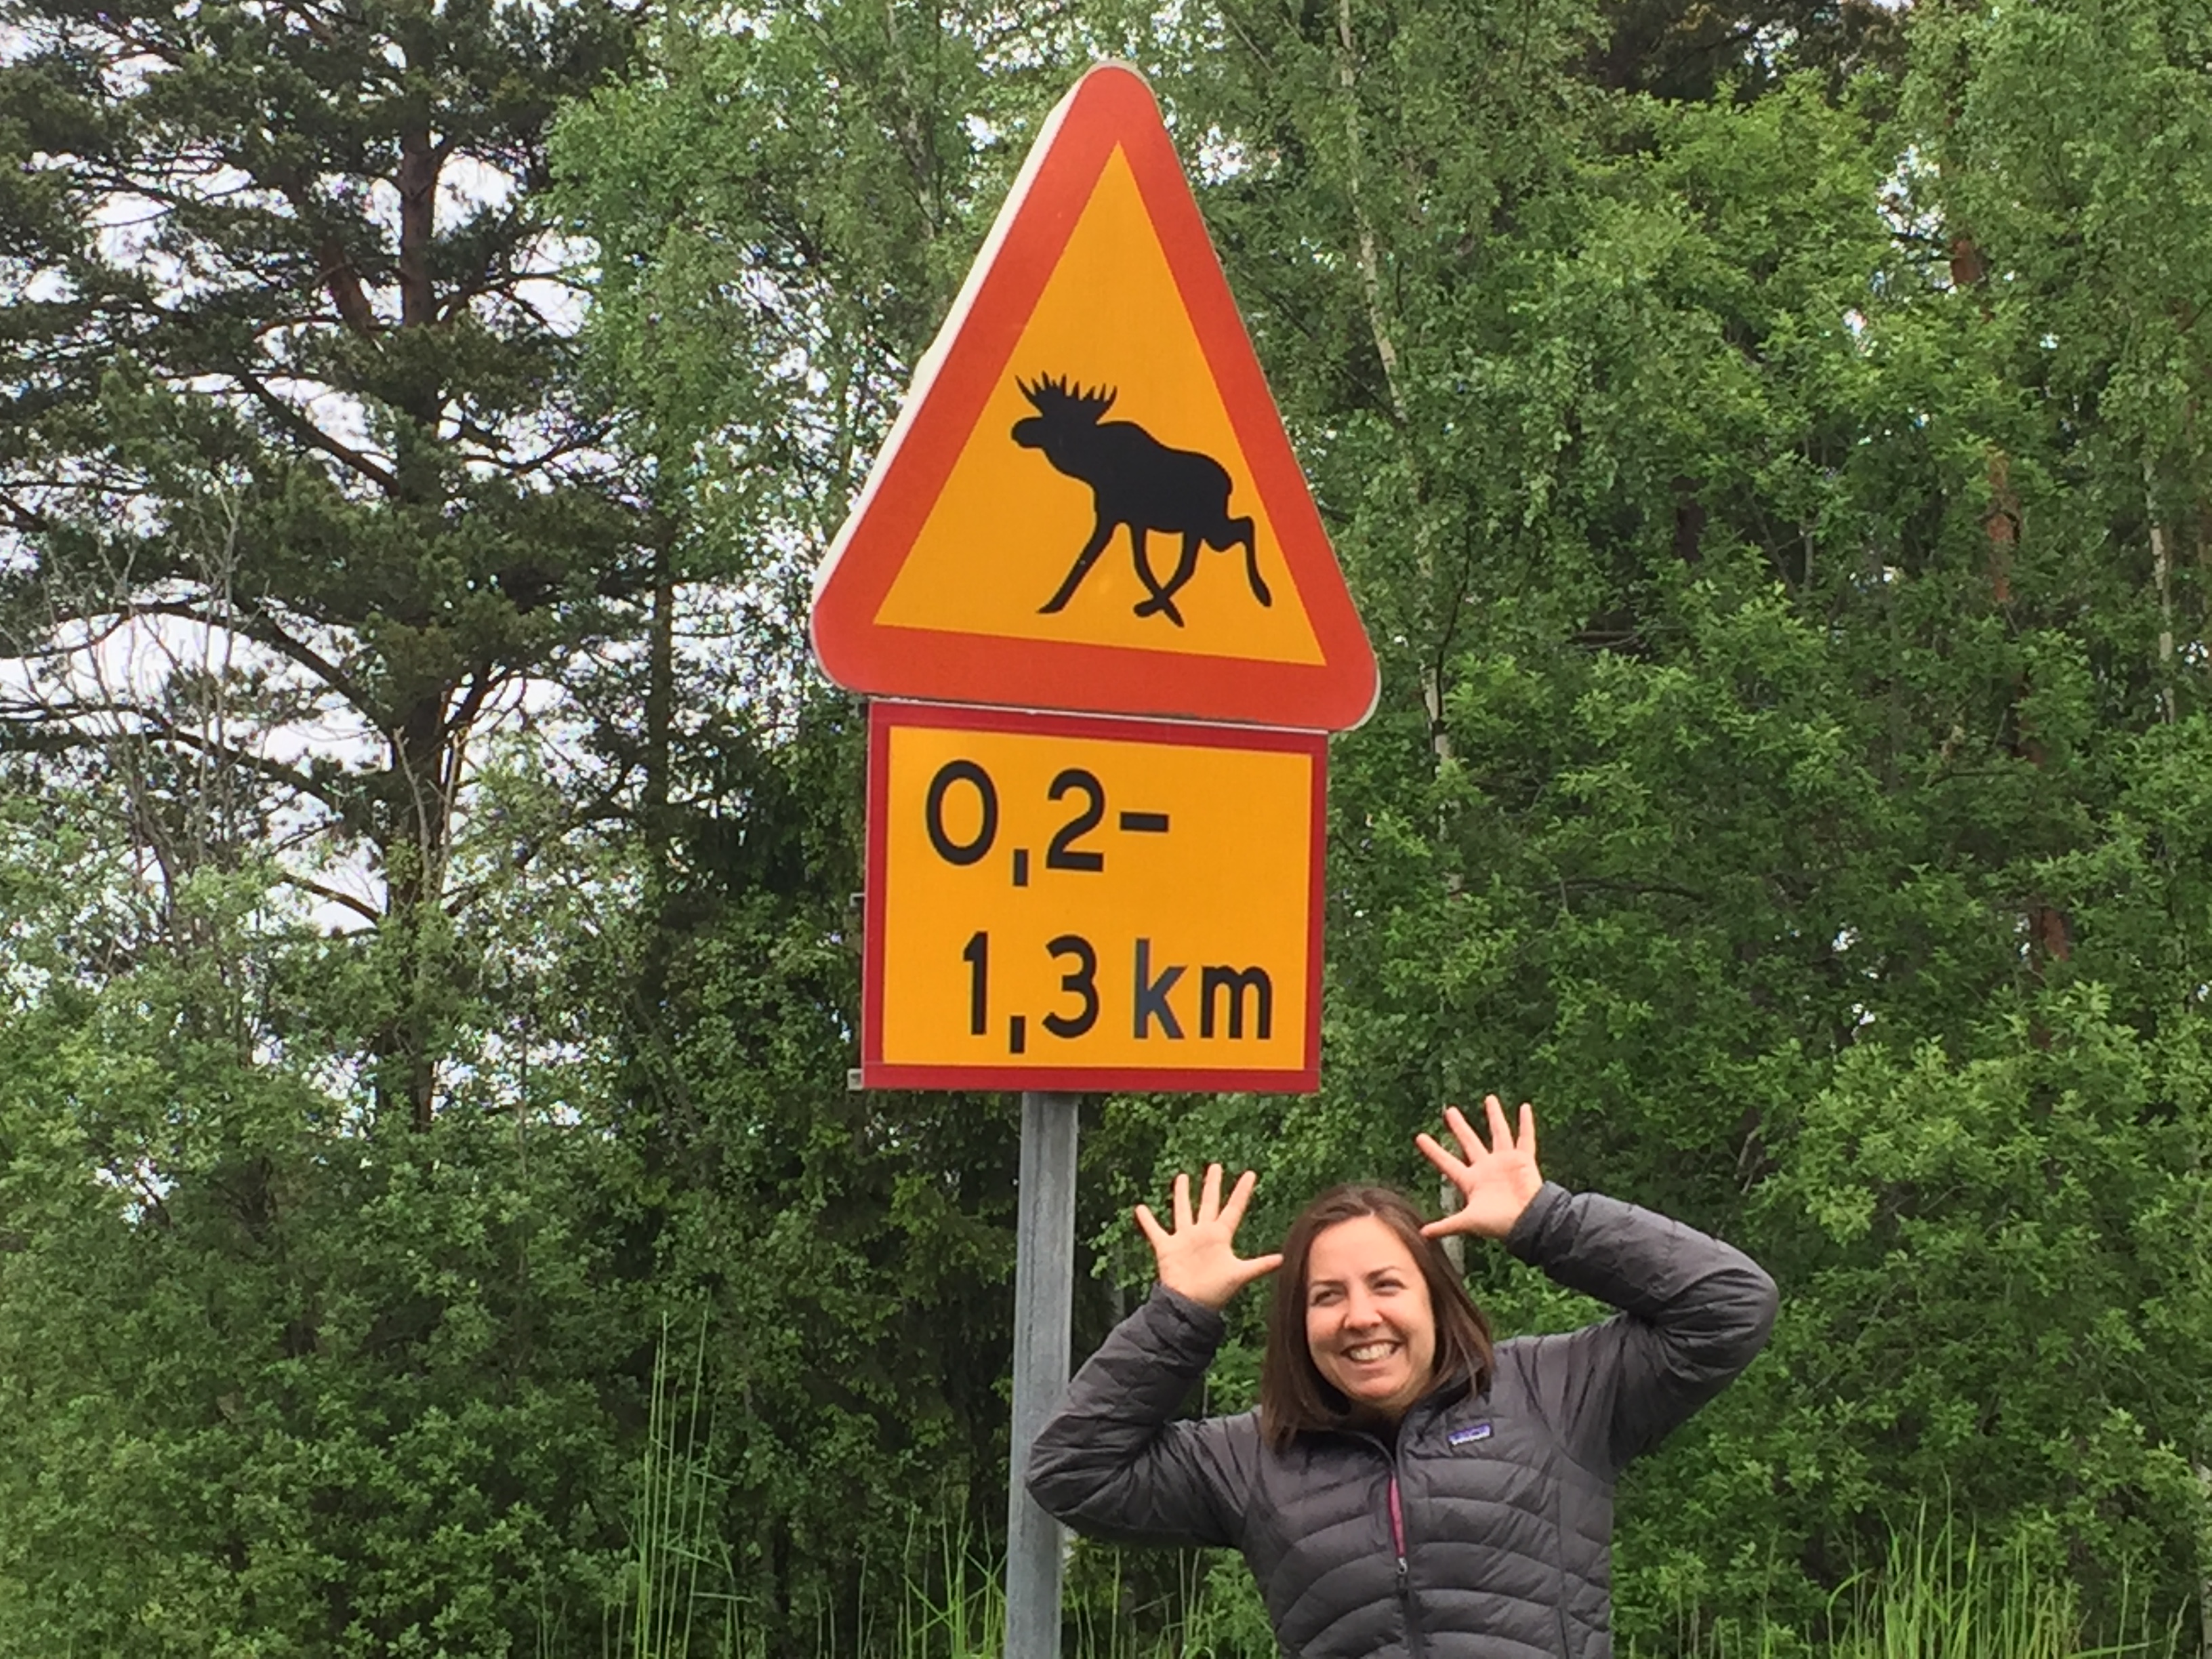 Moose crossing, with moose impersonator Kim!